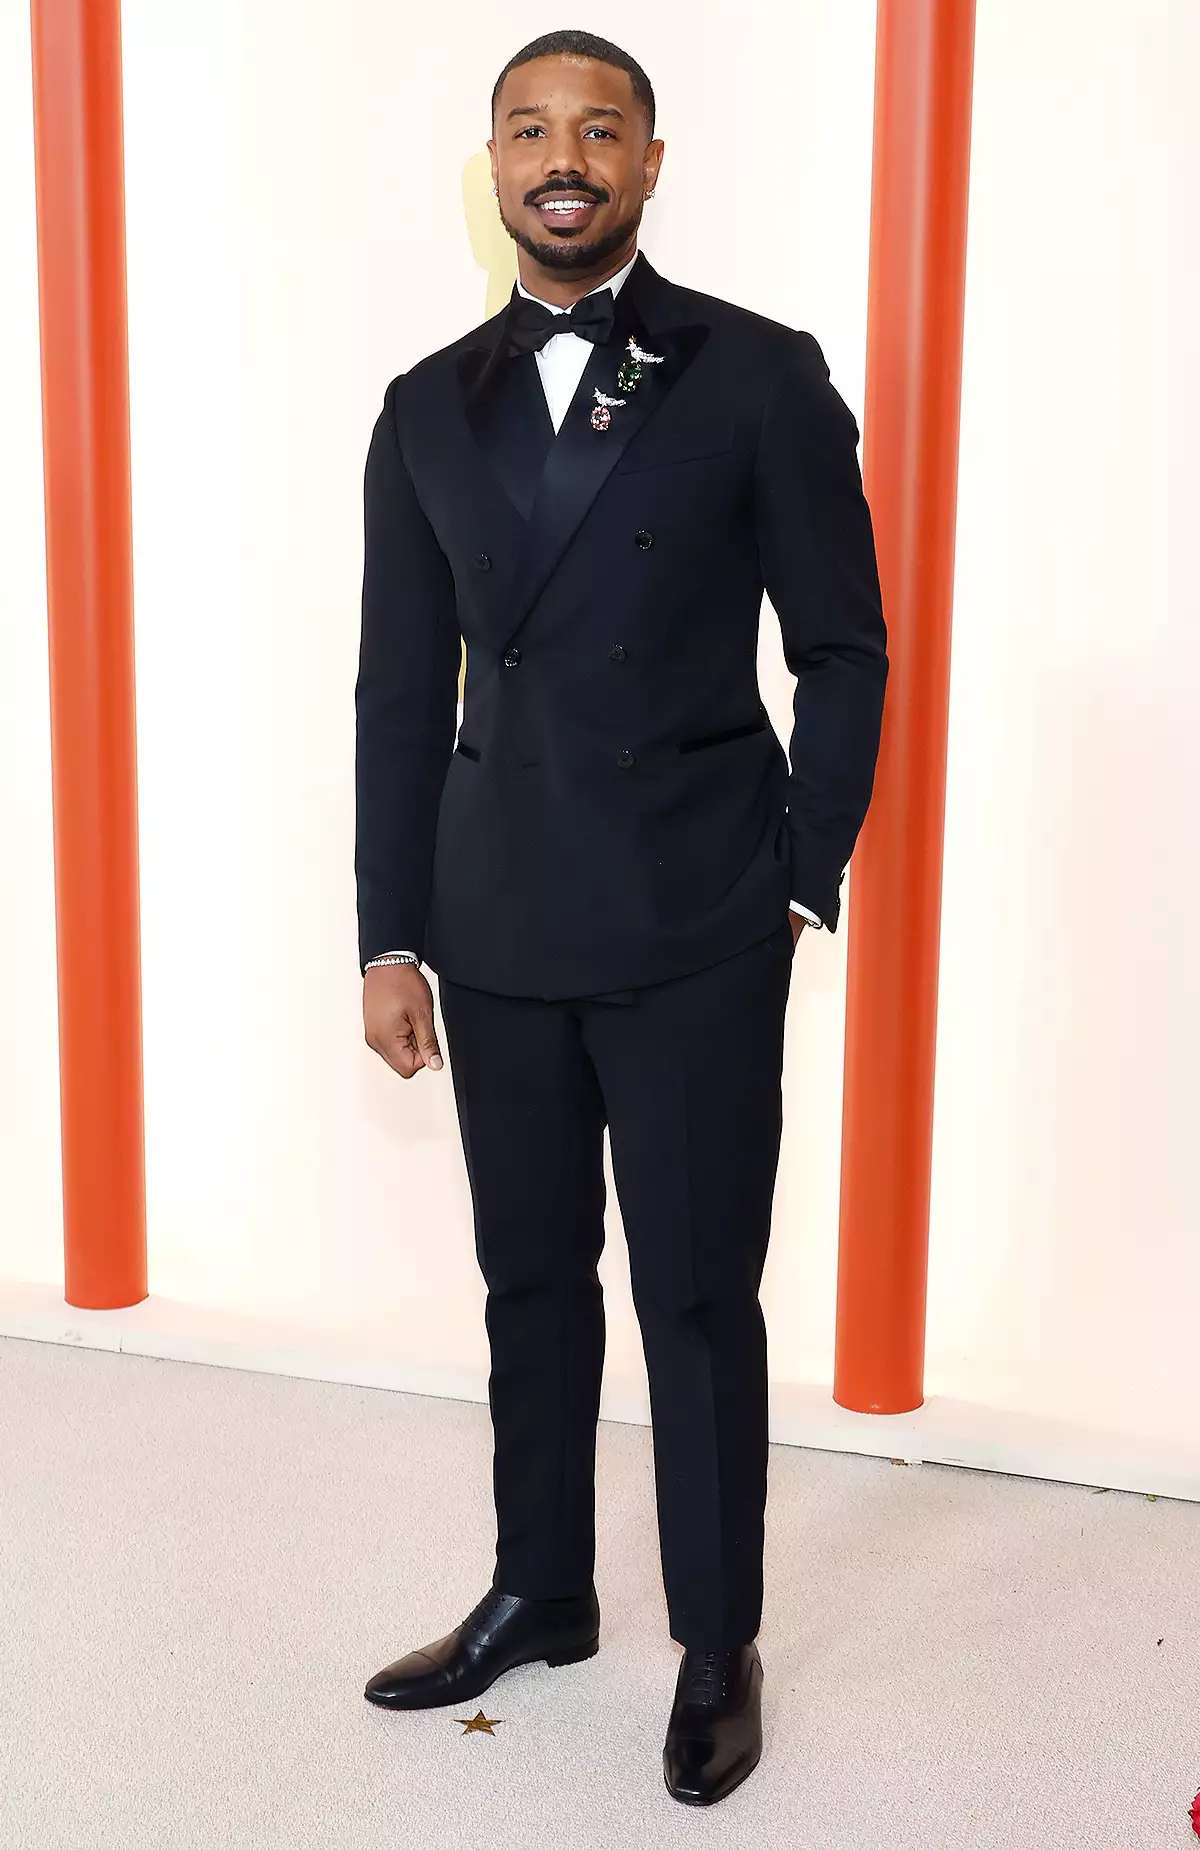 Louis Vuitton Cut Away Vest Monogram floral worn by Michael B. Jordan on  2019 SAG Awards Red Carpet